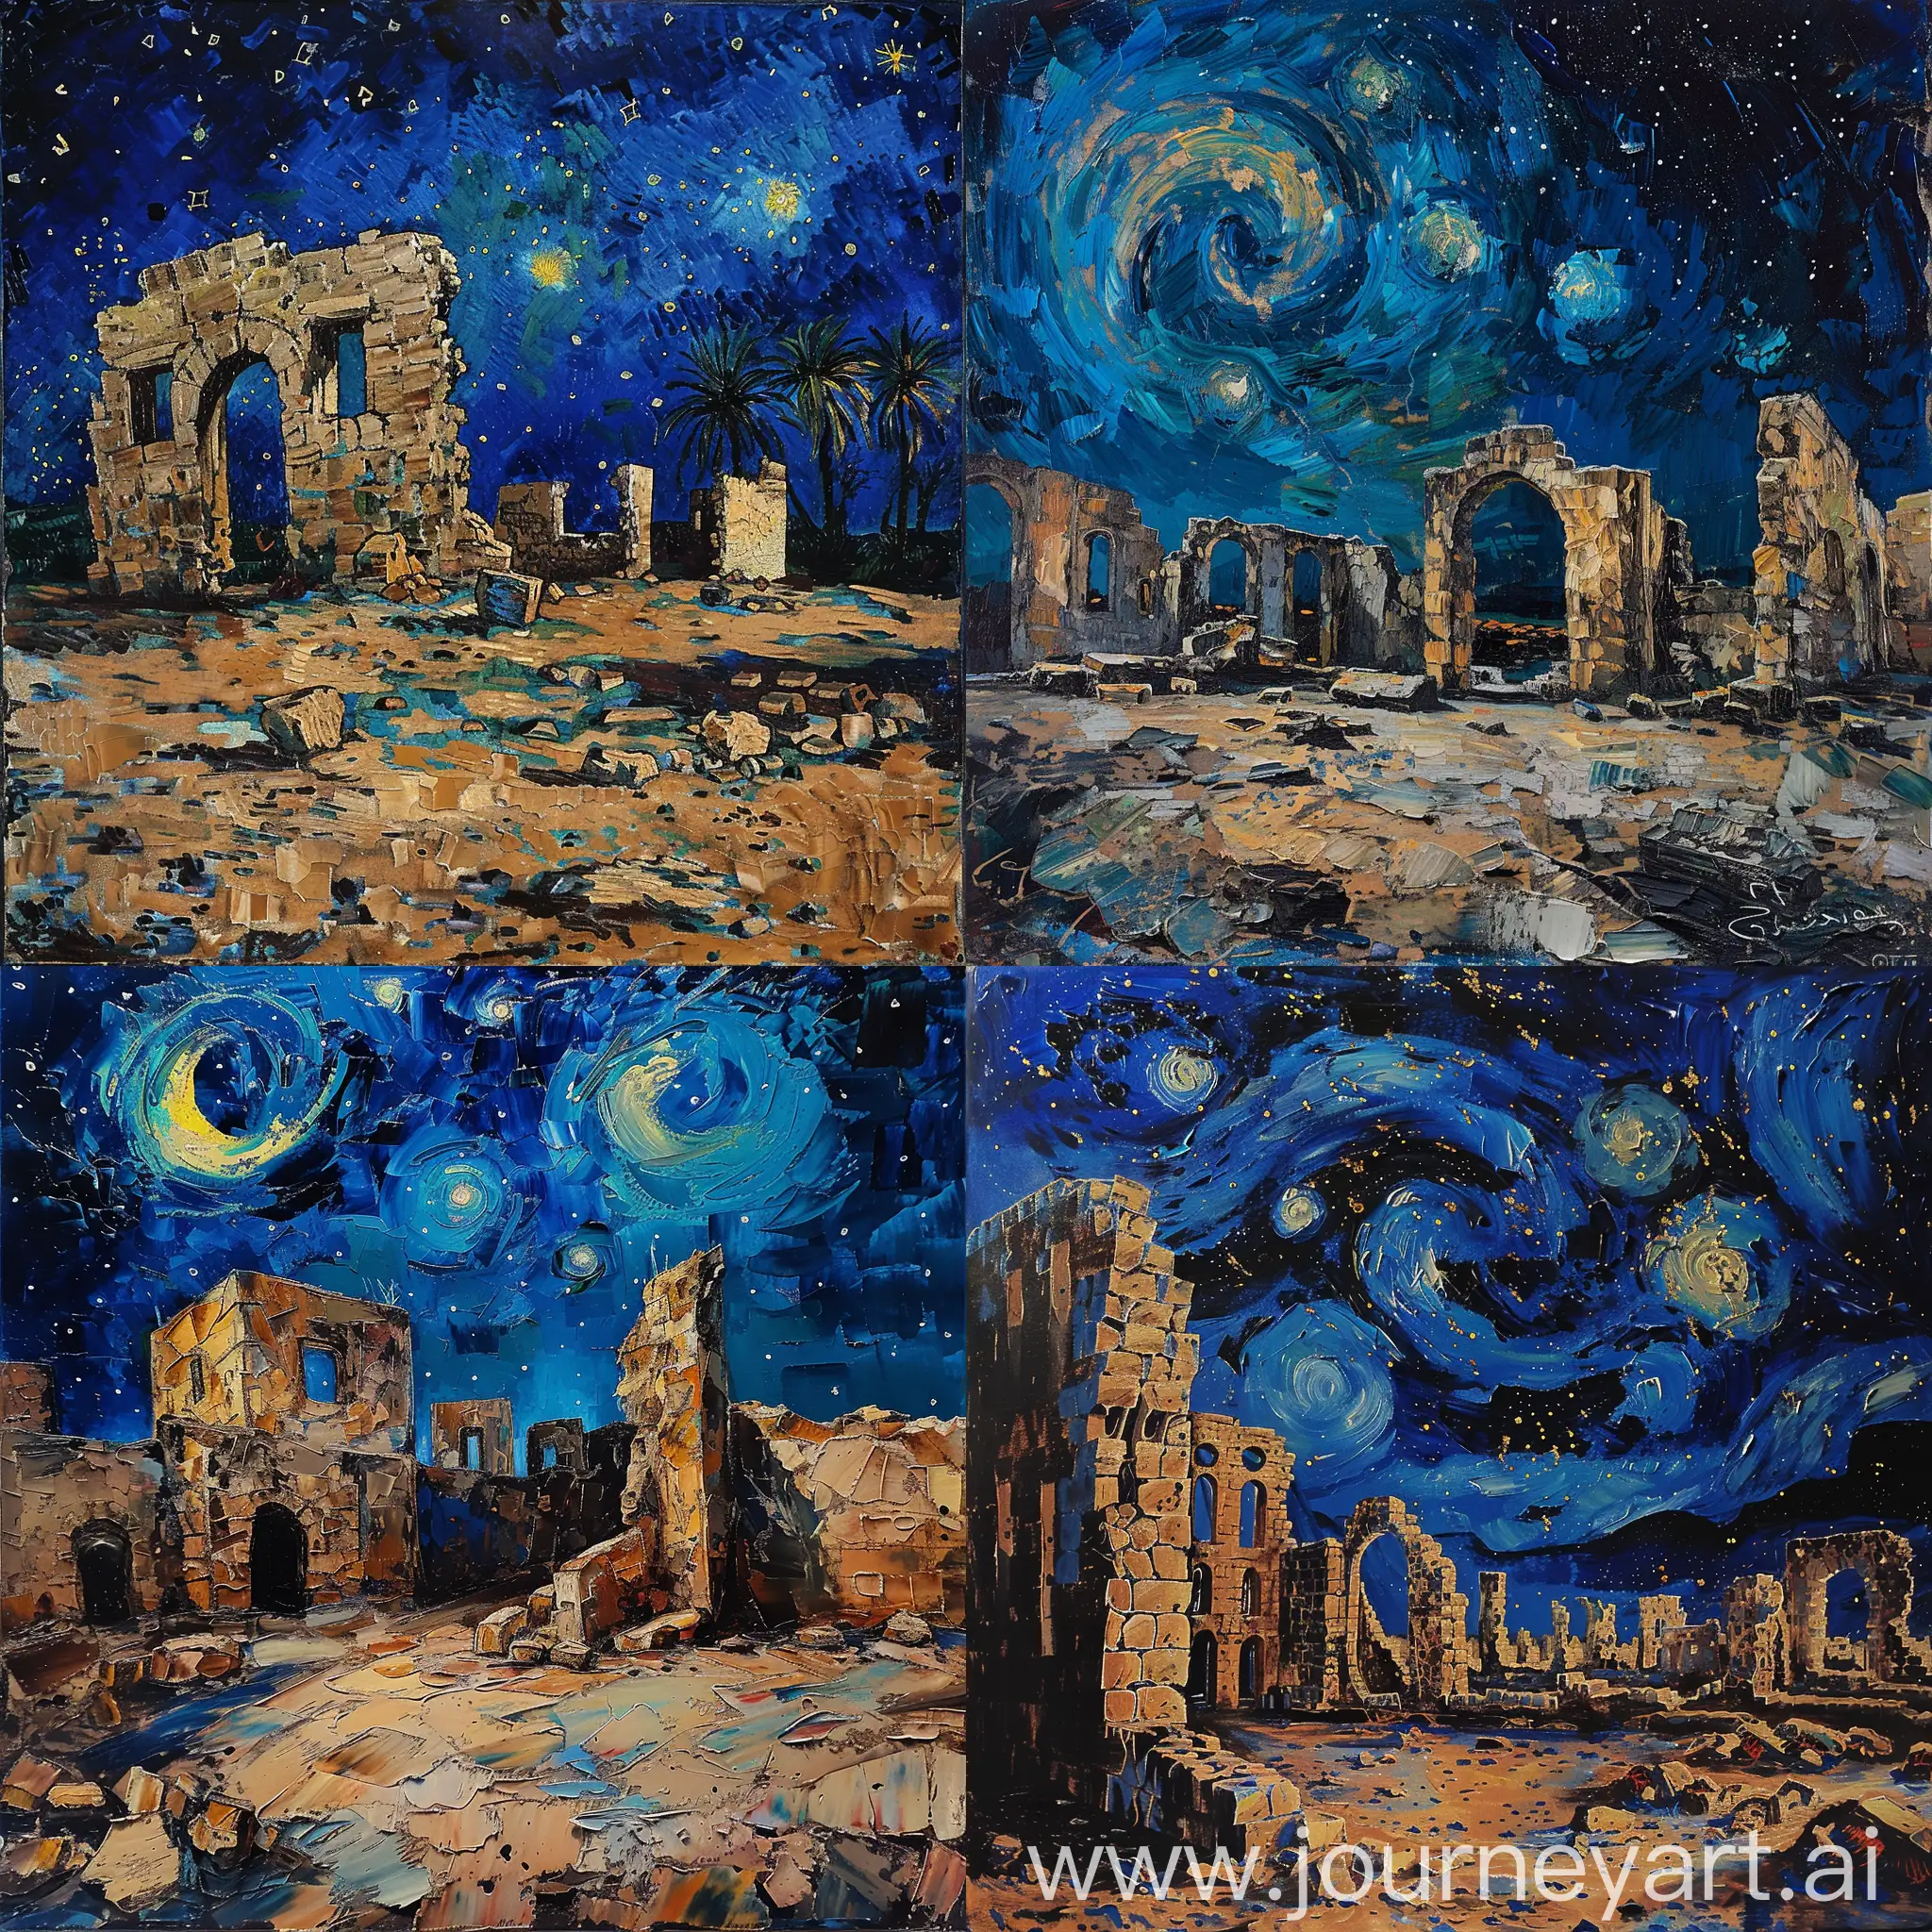 Ruins in Gaza,van Gogh style, stary nights sky,night mood.